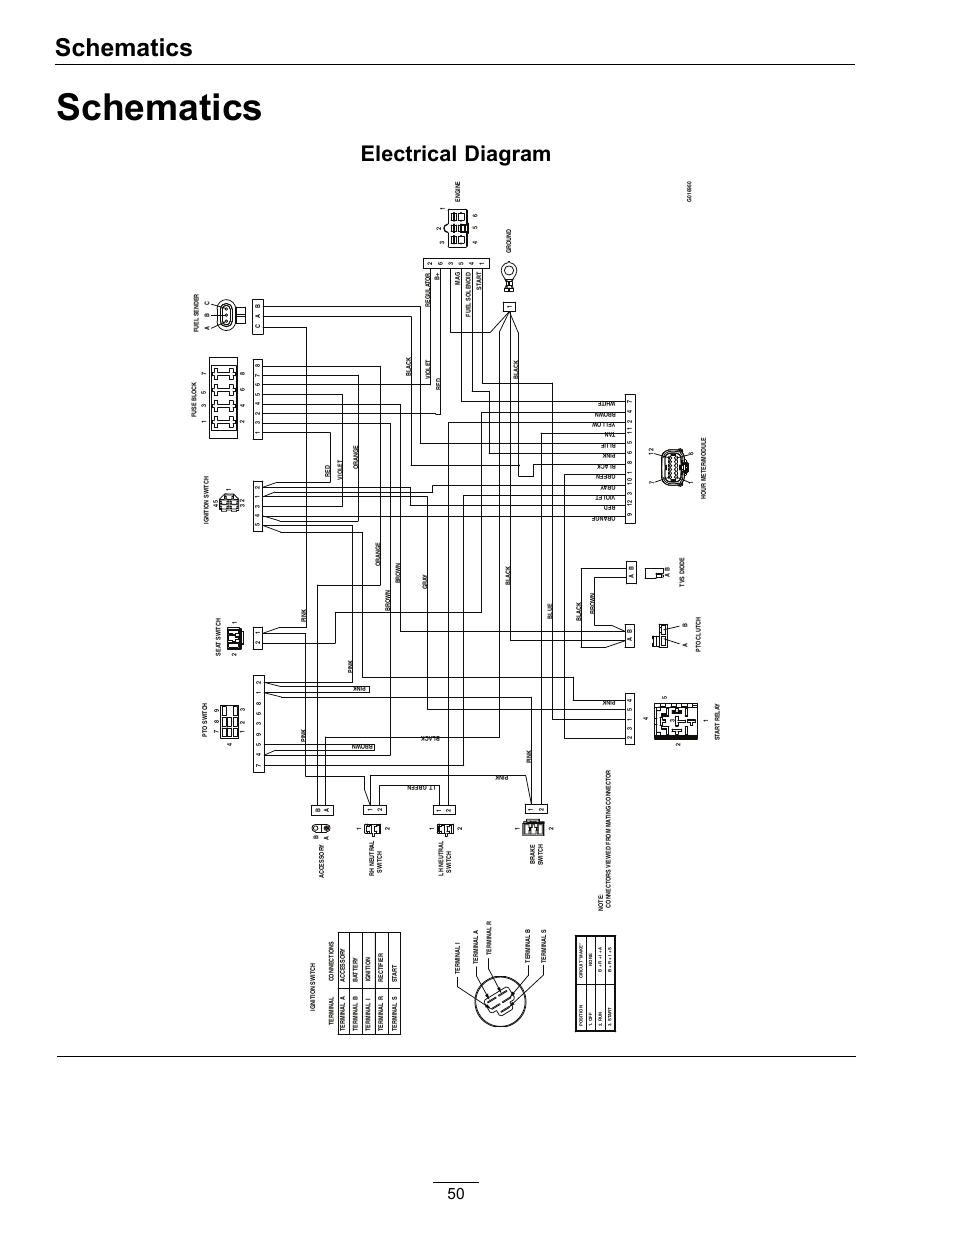 gm 03-06 power mirror wiring harness wiring diagram